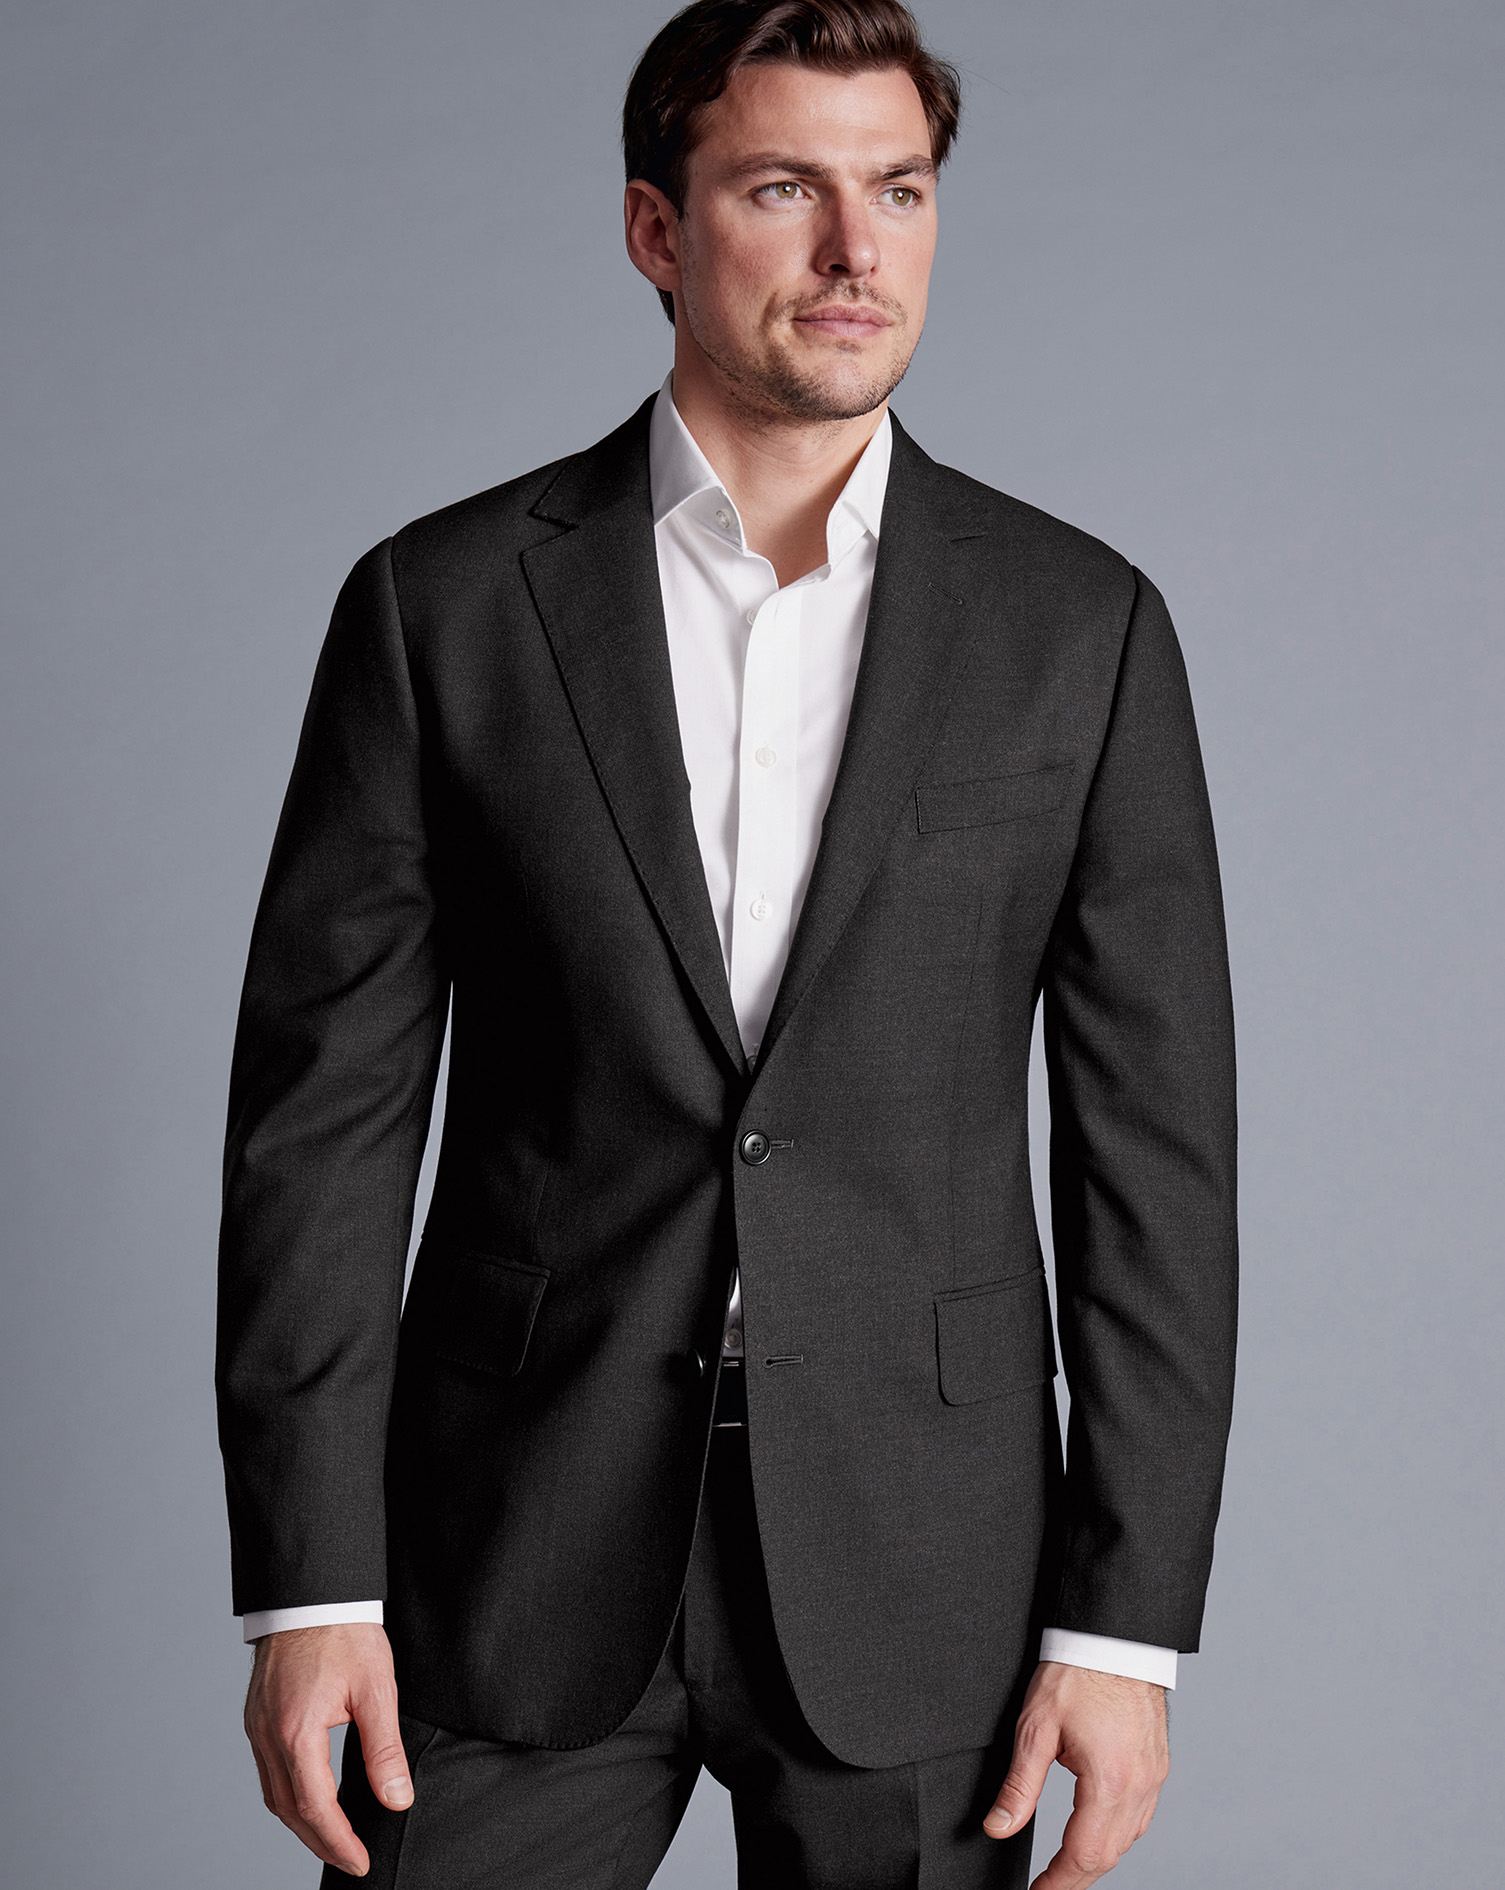 Men's Charles Tyrwhitt Italian Luxury Suit na Jacket - Charcoal Grey Size 44R Wool
